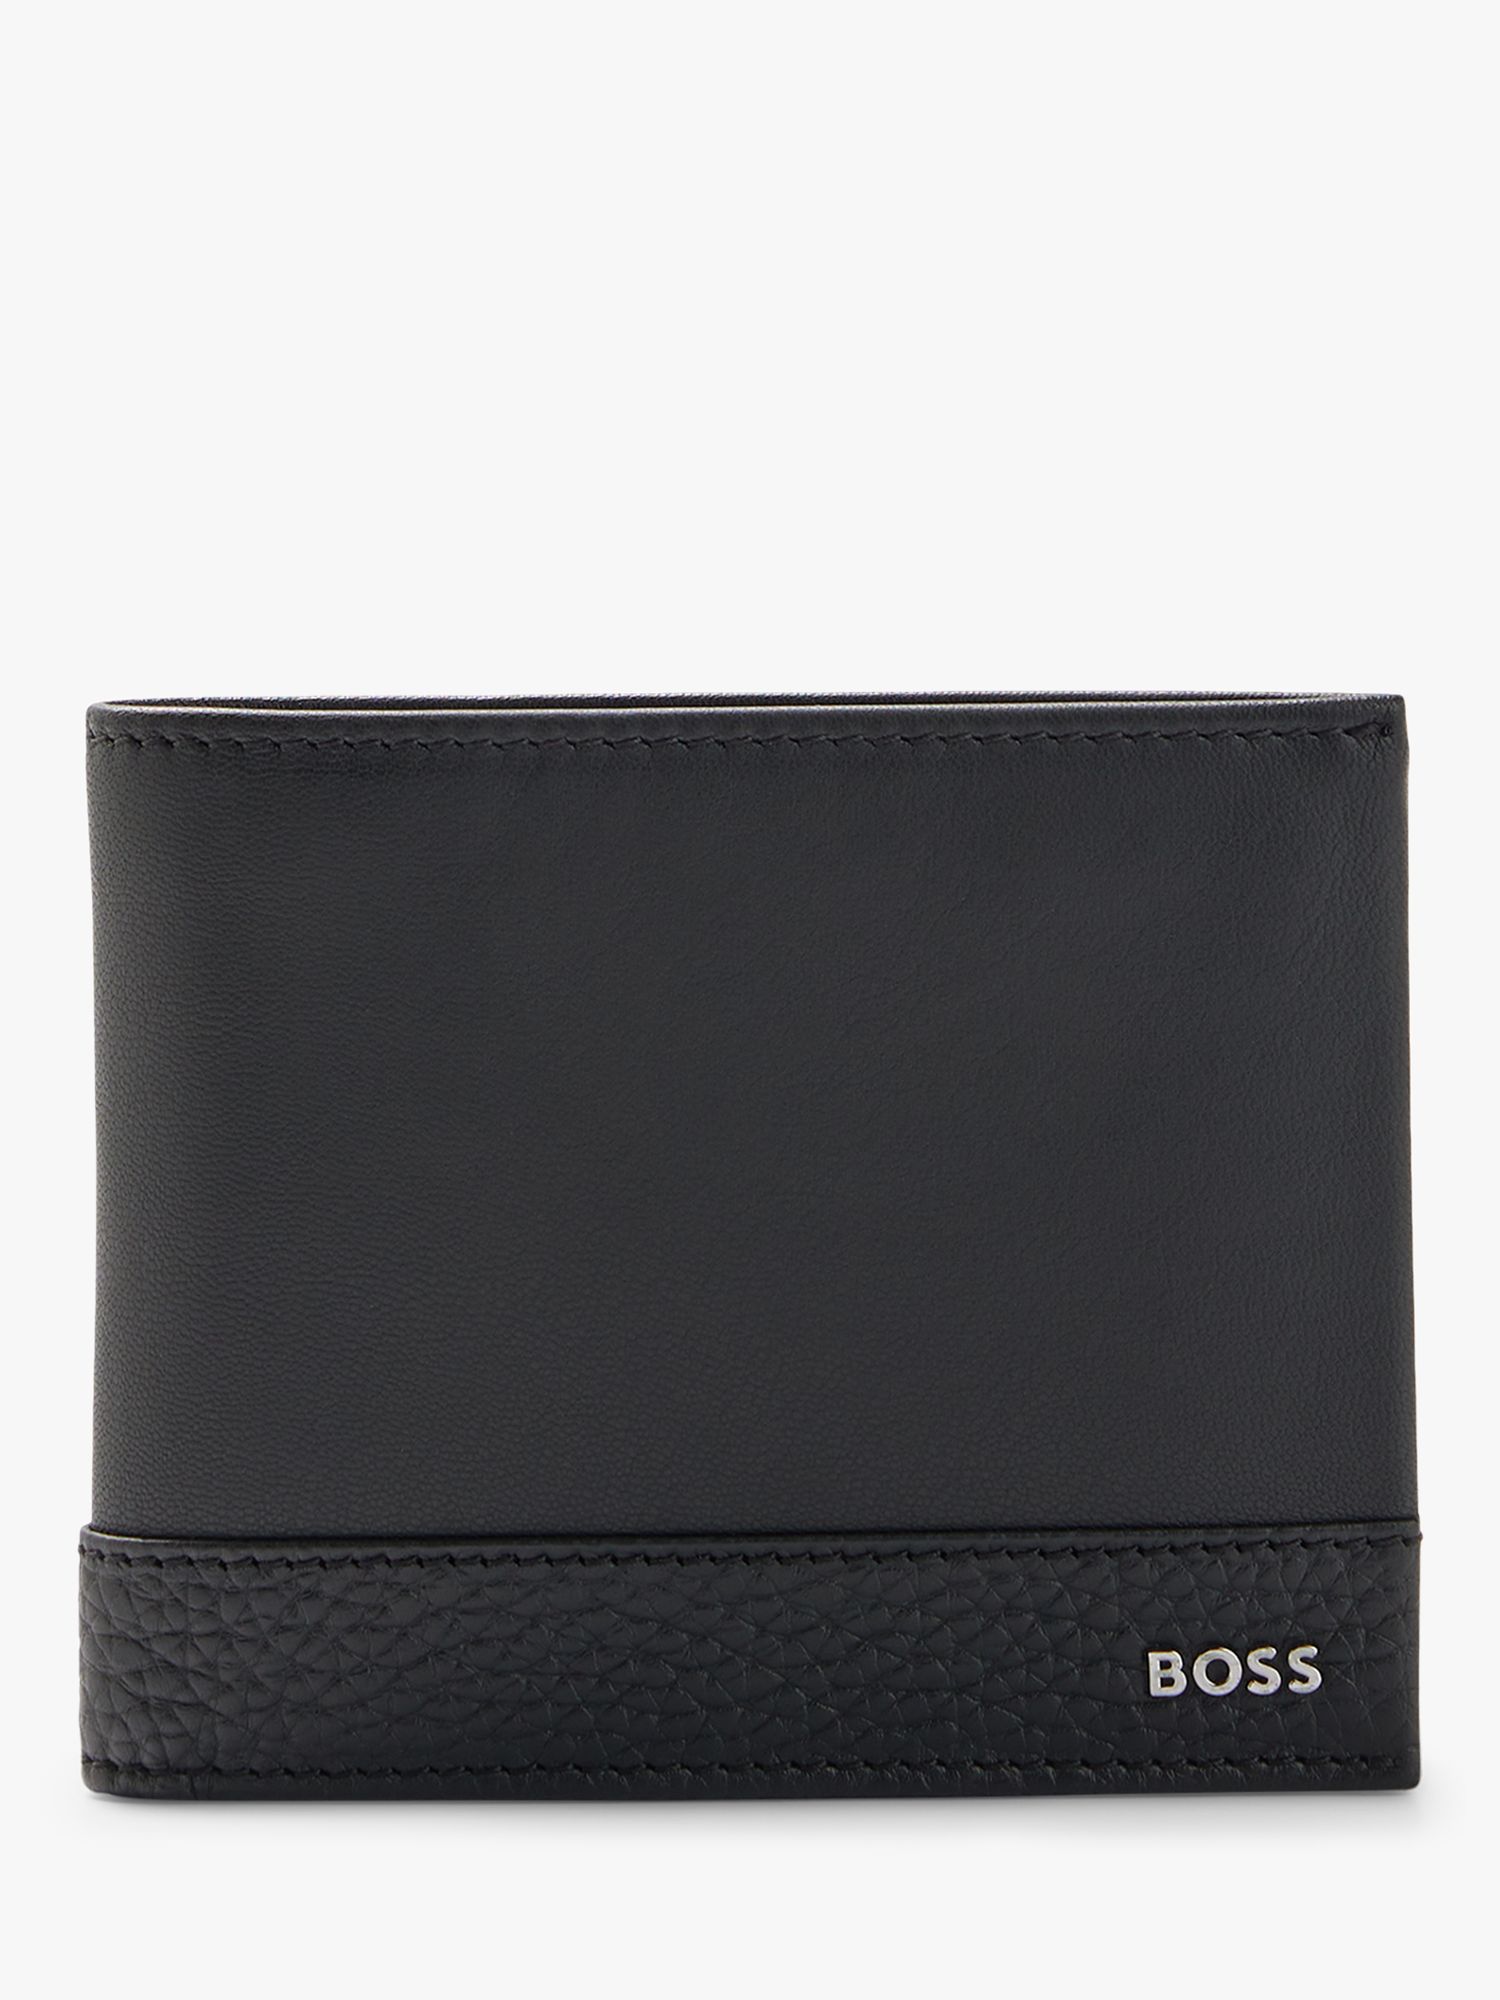 BOSS Gavin Tri-fold Leather Wallet, Black at John Lewis & Partners